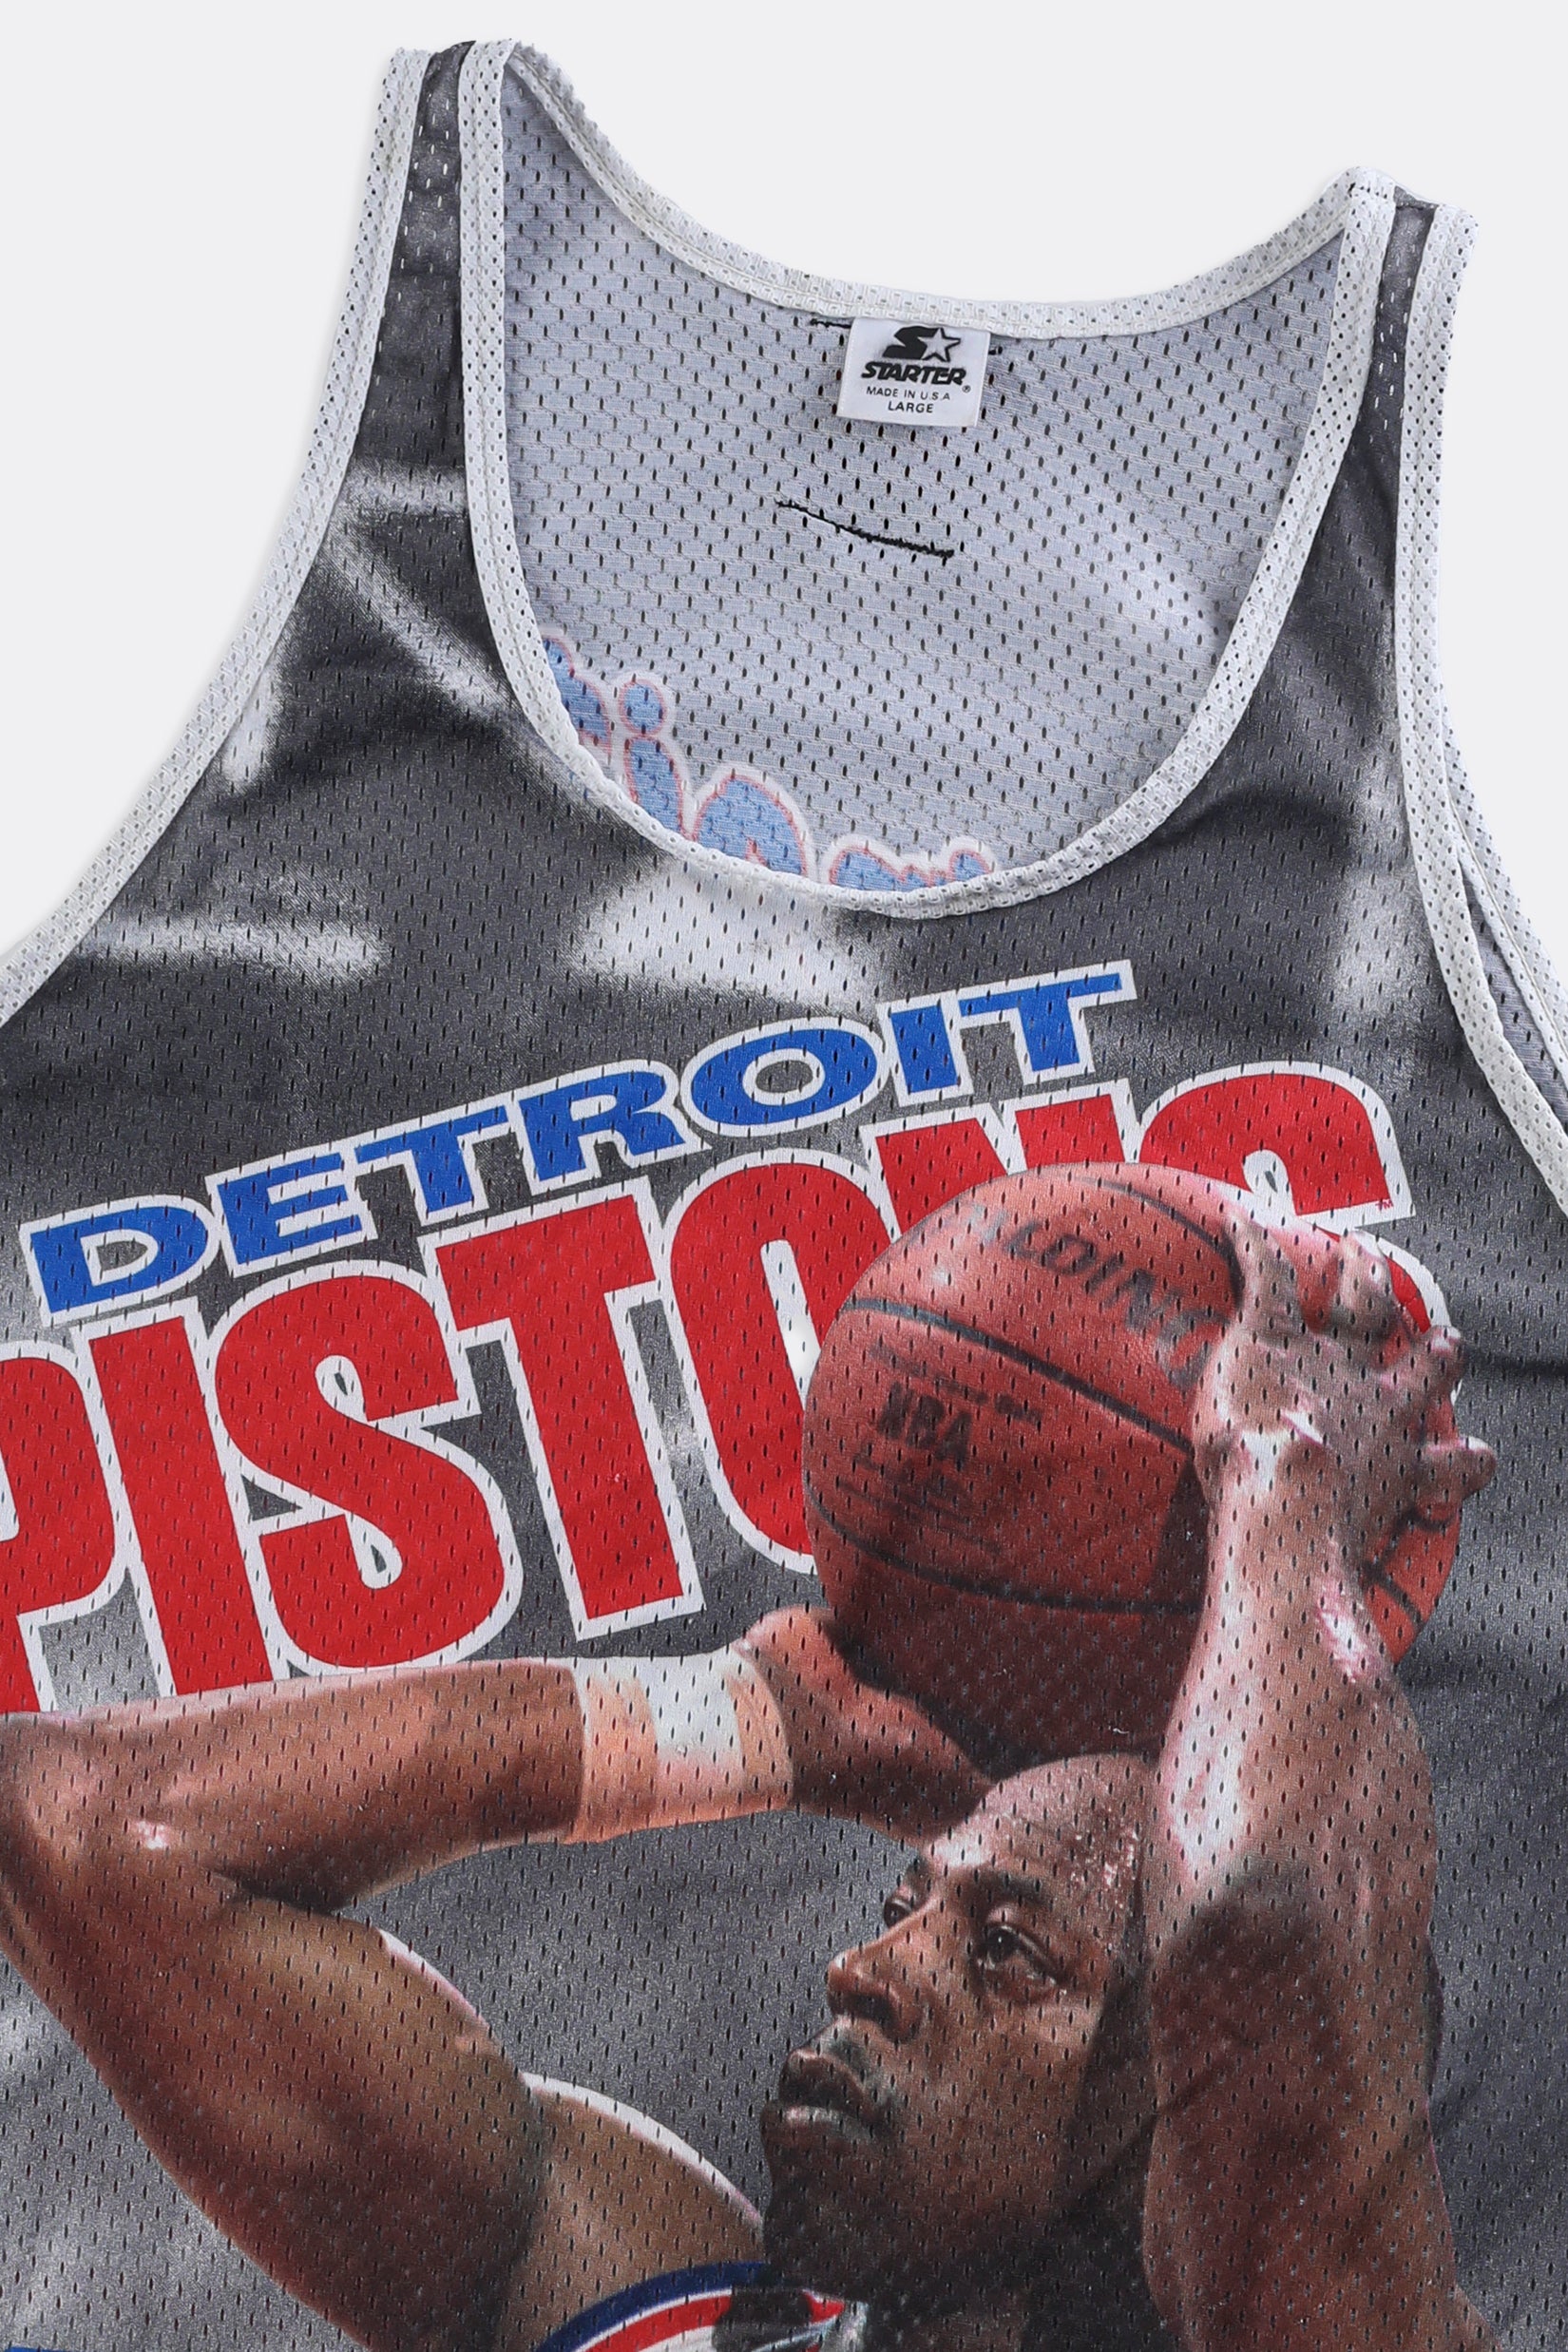 Official Detroit Pistons Gear, Pistons Jerseys, Pistons Shop